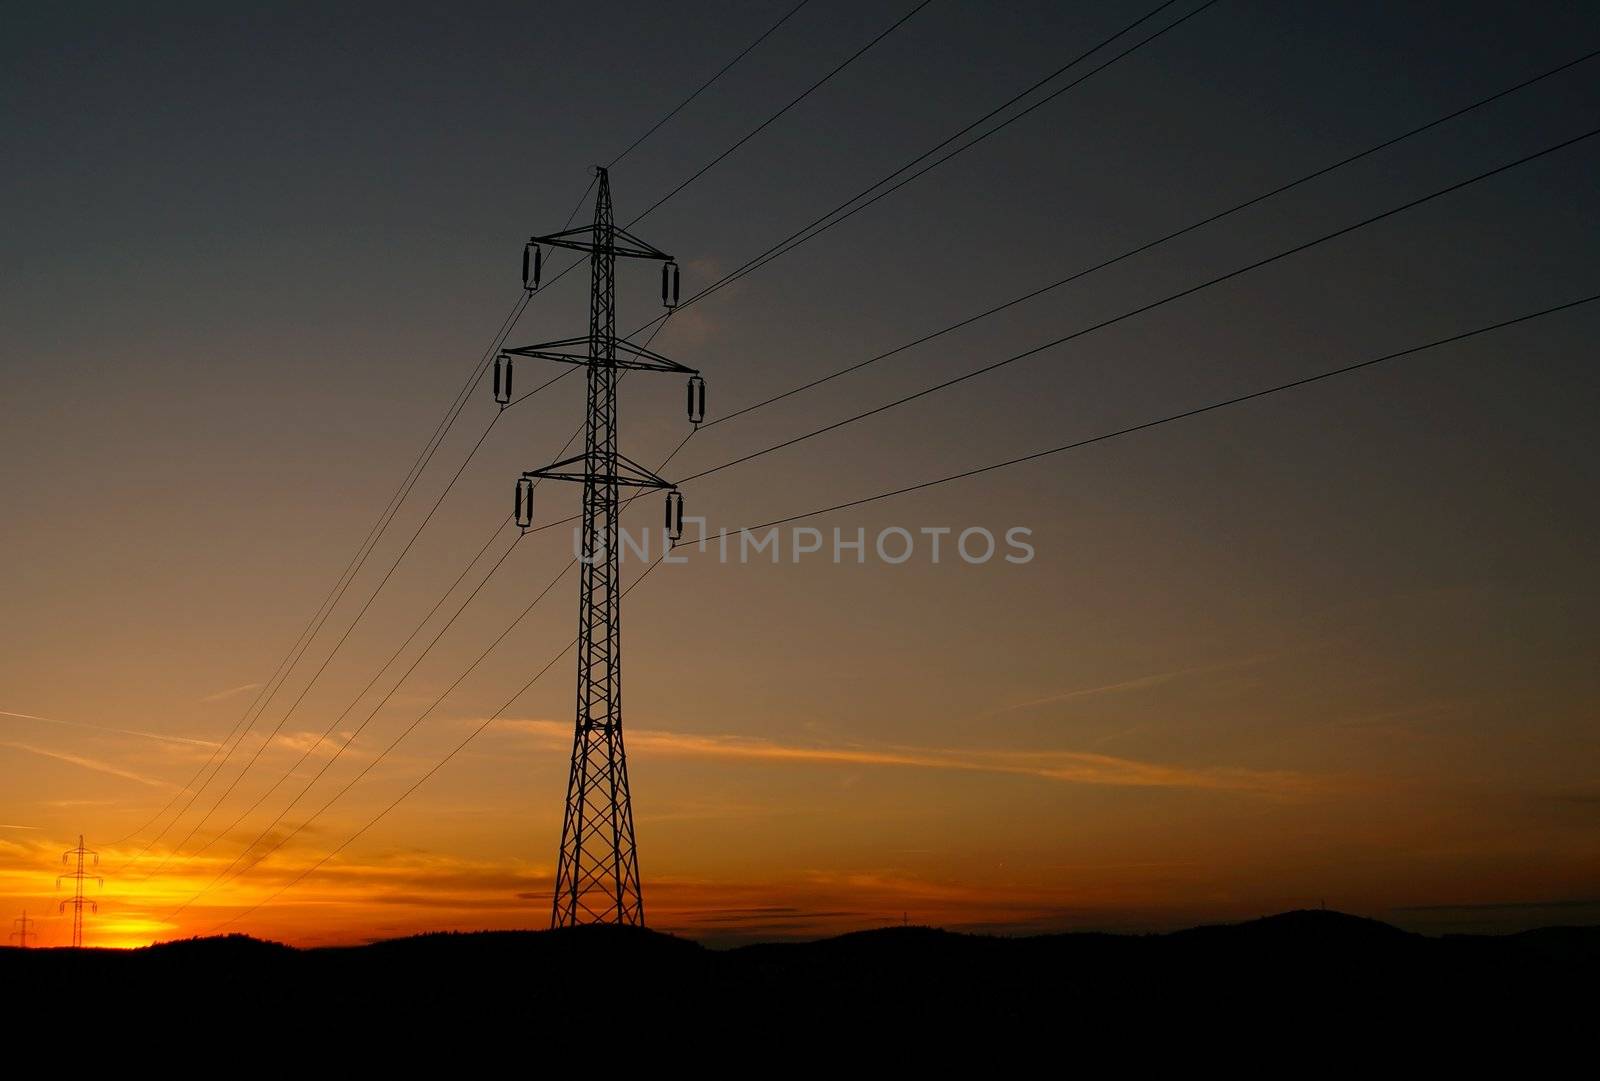 High voltage electricity pylon over sunset by pmisak